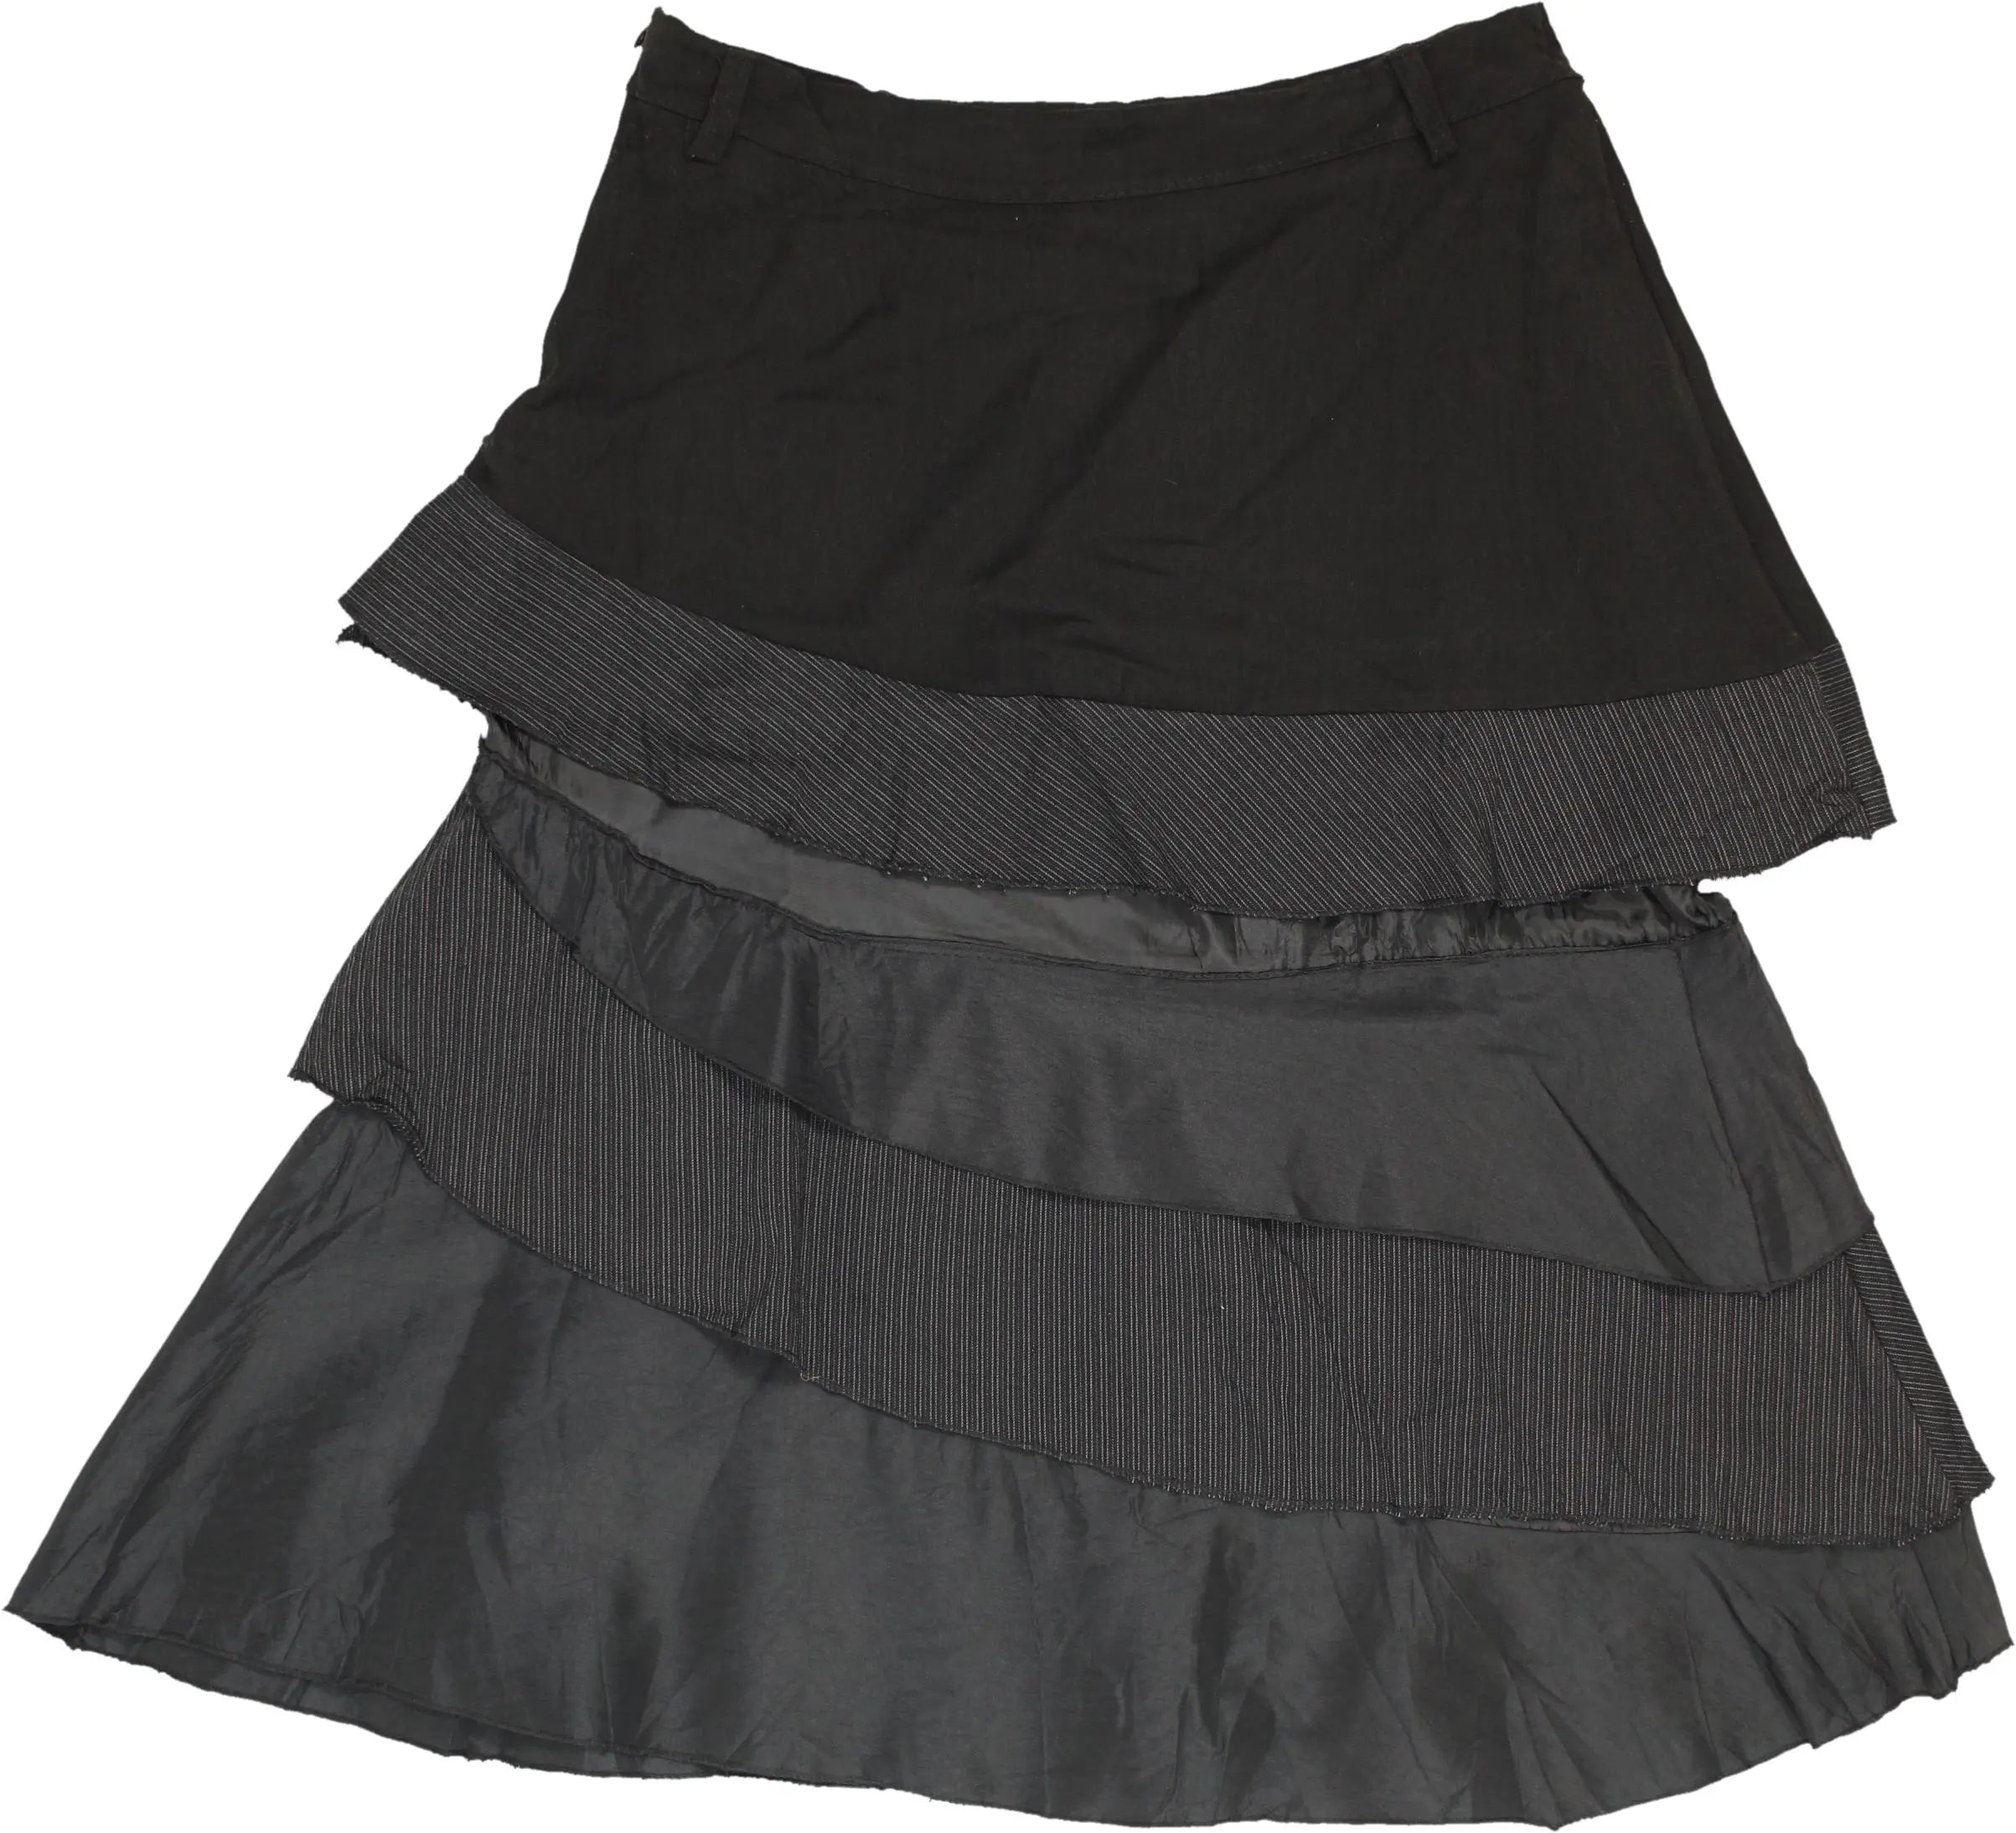 Pas de Quoi - Layer Skirt- ThriftTale.com - Vintage and second handclothing